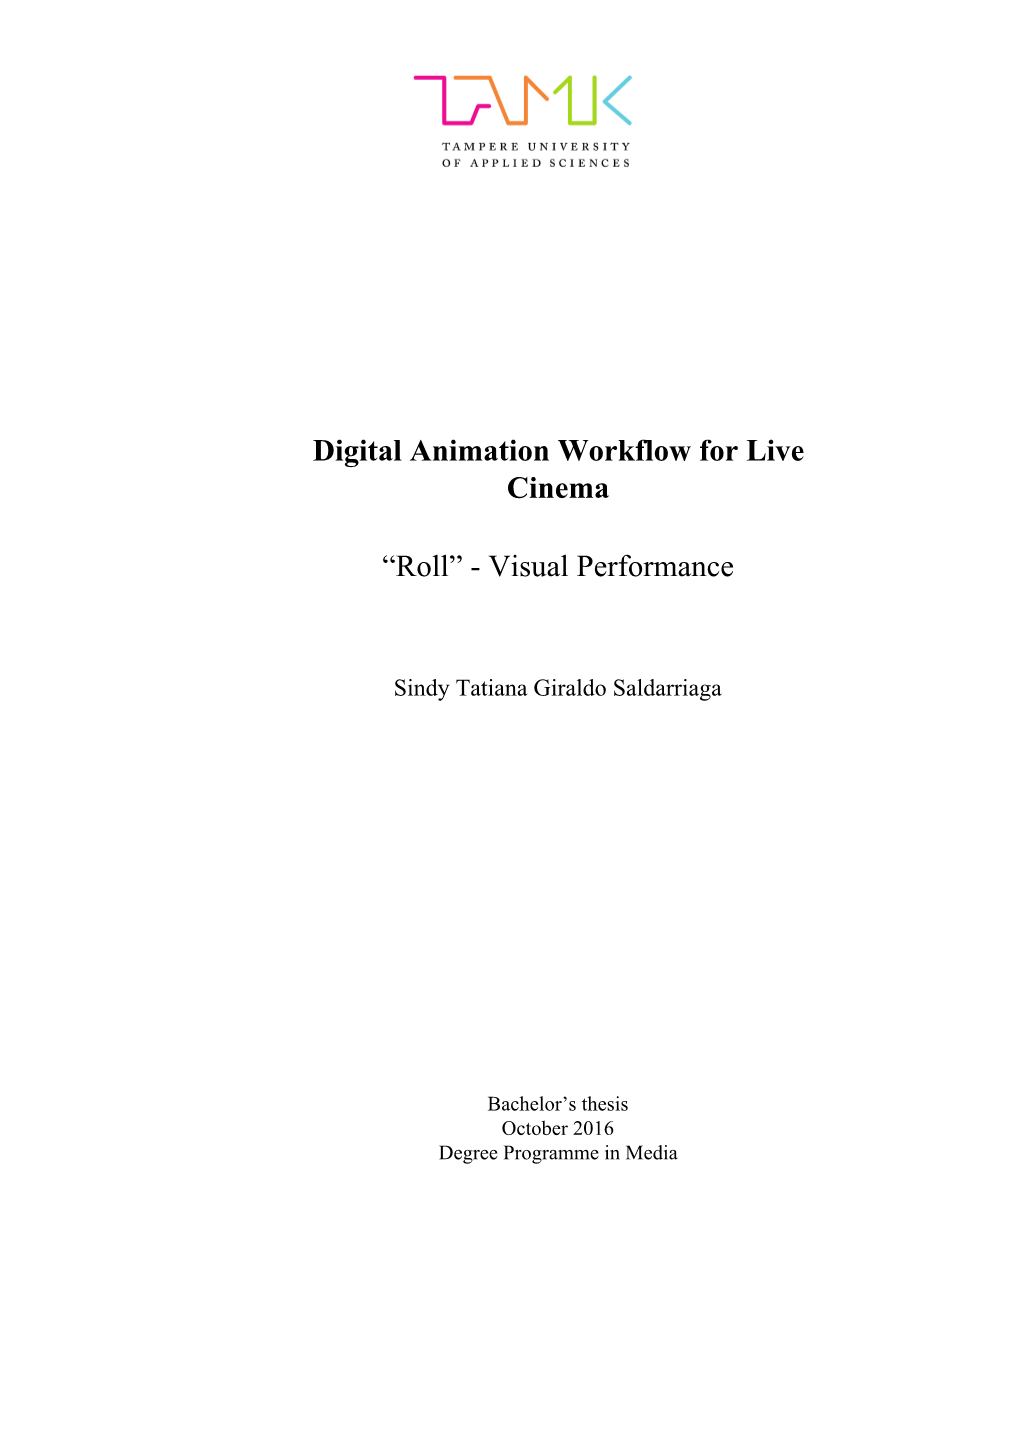 Digital Animation Workflow for Live Cinema